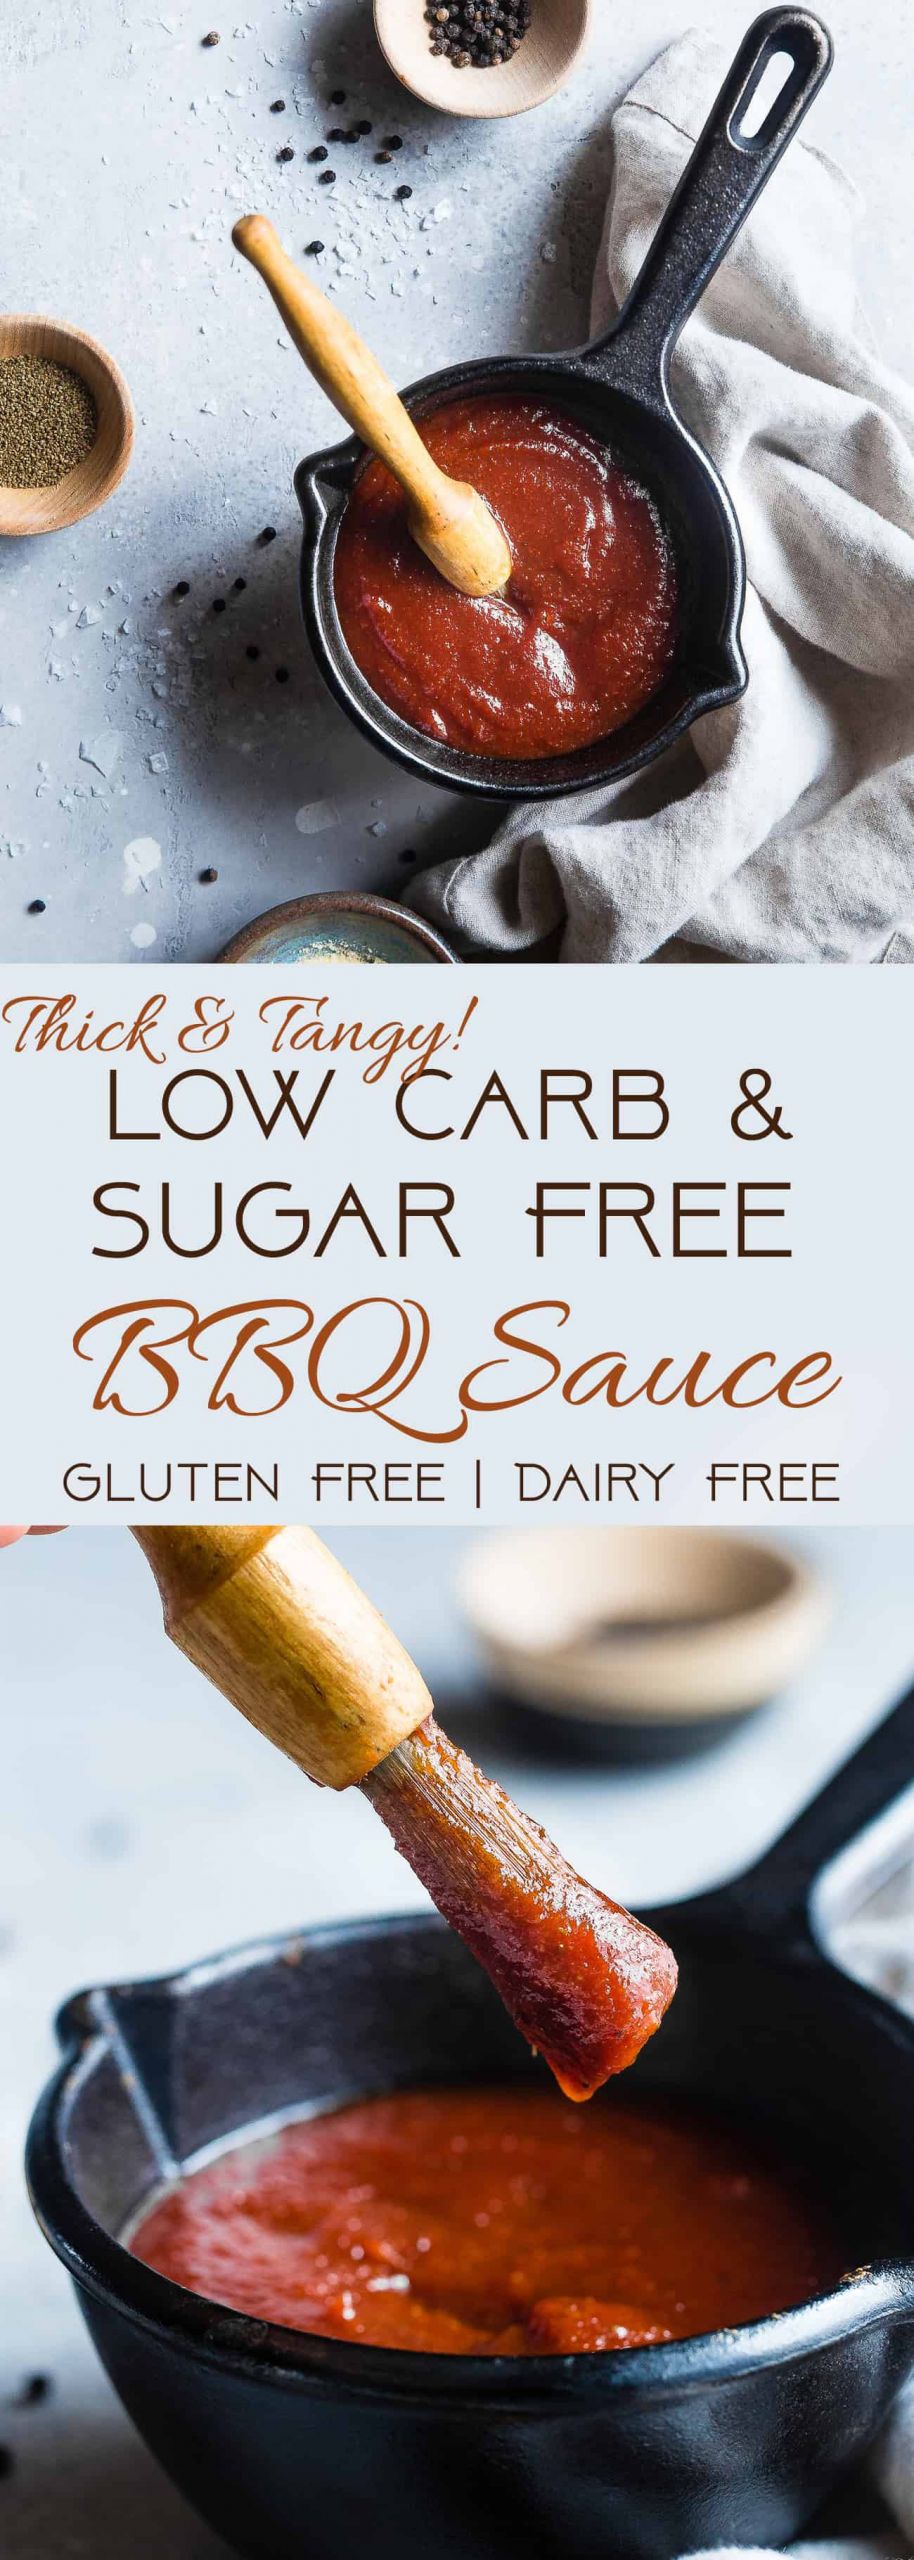 Carb Free Bbq Sauce
 Sugar Free Low Carb BBQ Sauce Recipe Food Faith Fitness